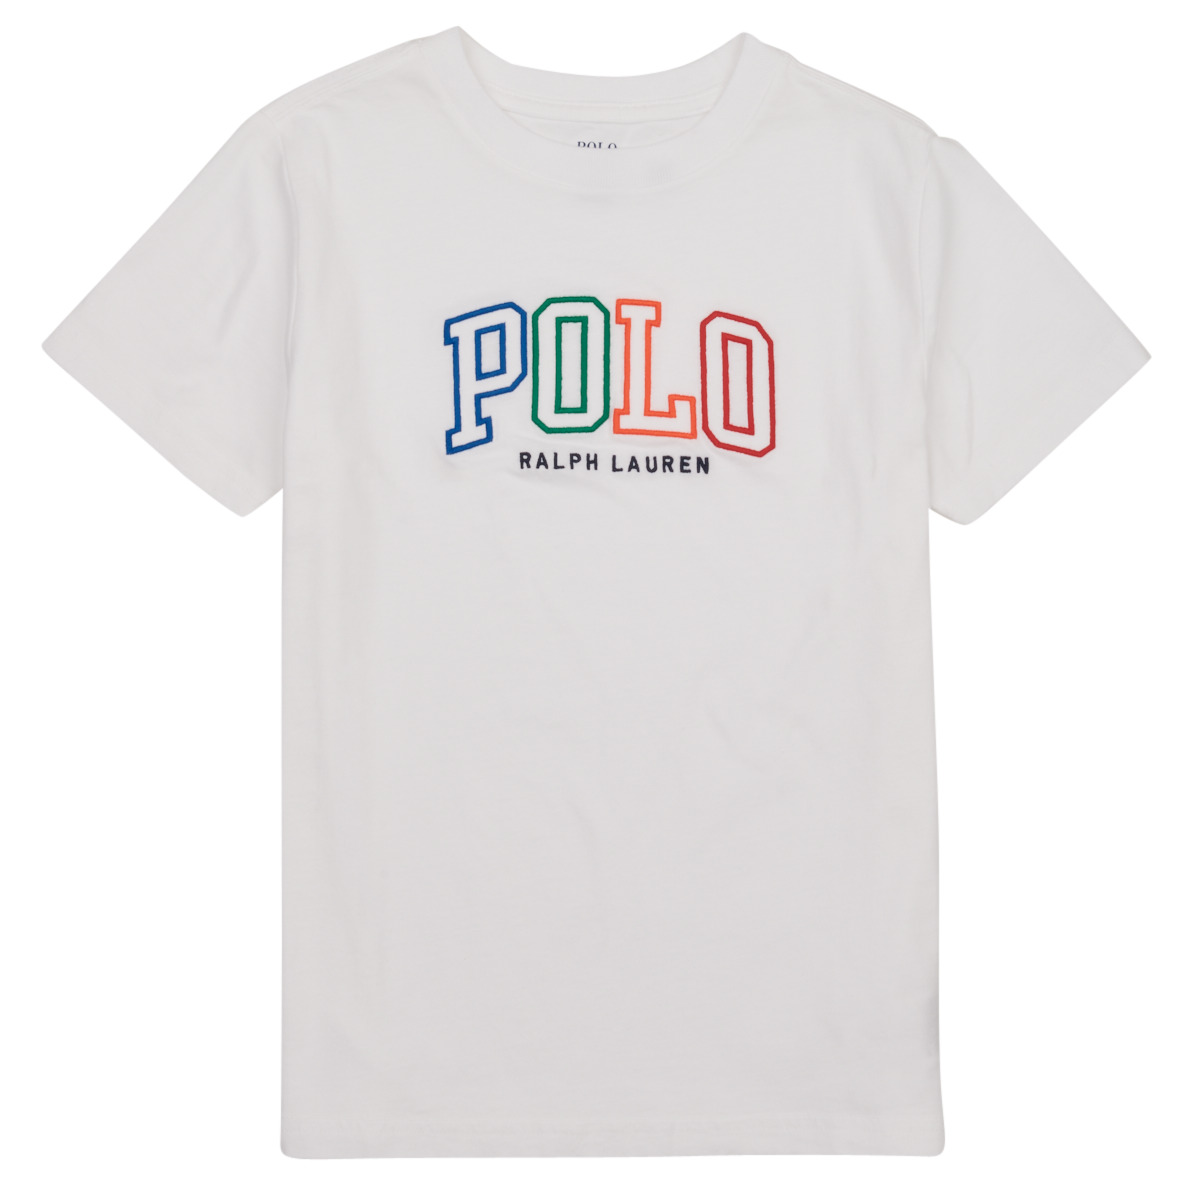 Vêtements Fille Camisa Polo Reserva Polo Reserva Ralph Lauren Reta Logo Lilás SSCNM4-KNIT SHIRTS Blanc